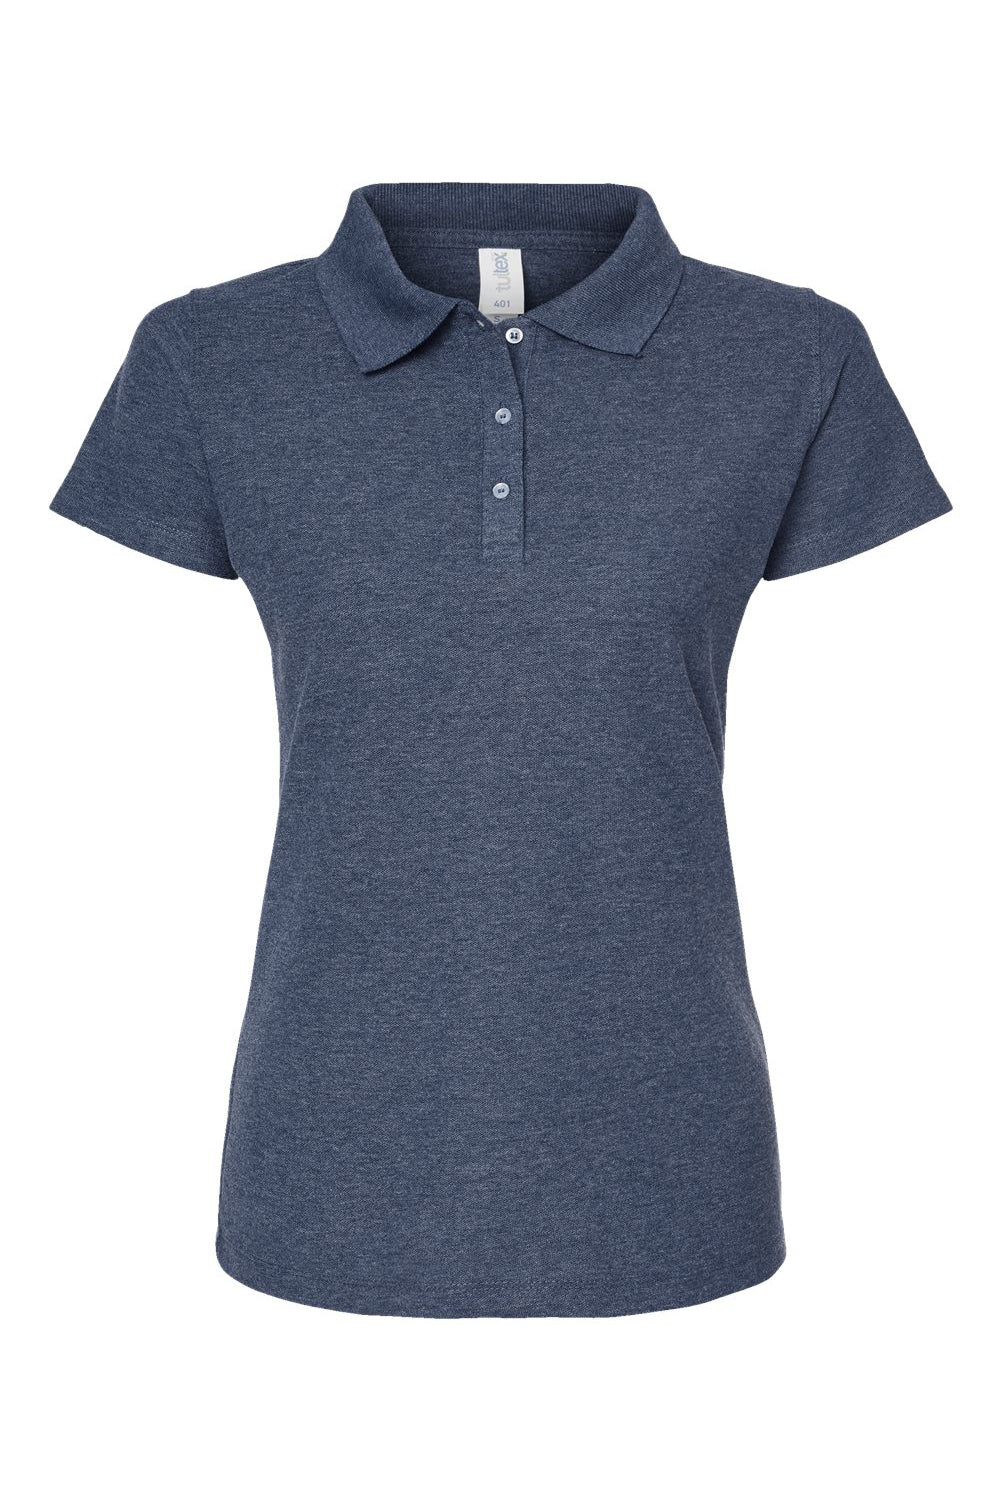 Tultex 401 Womens Sport Shirt Sleeve Polo Shirt Heather Navy Blue Flat Front